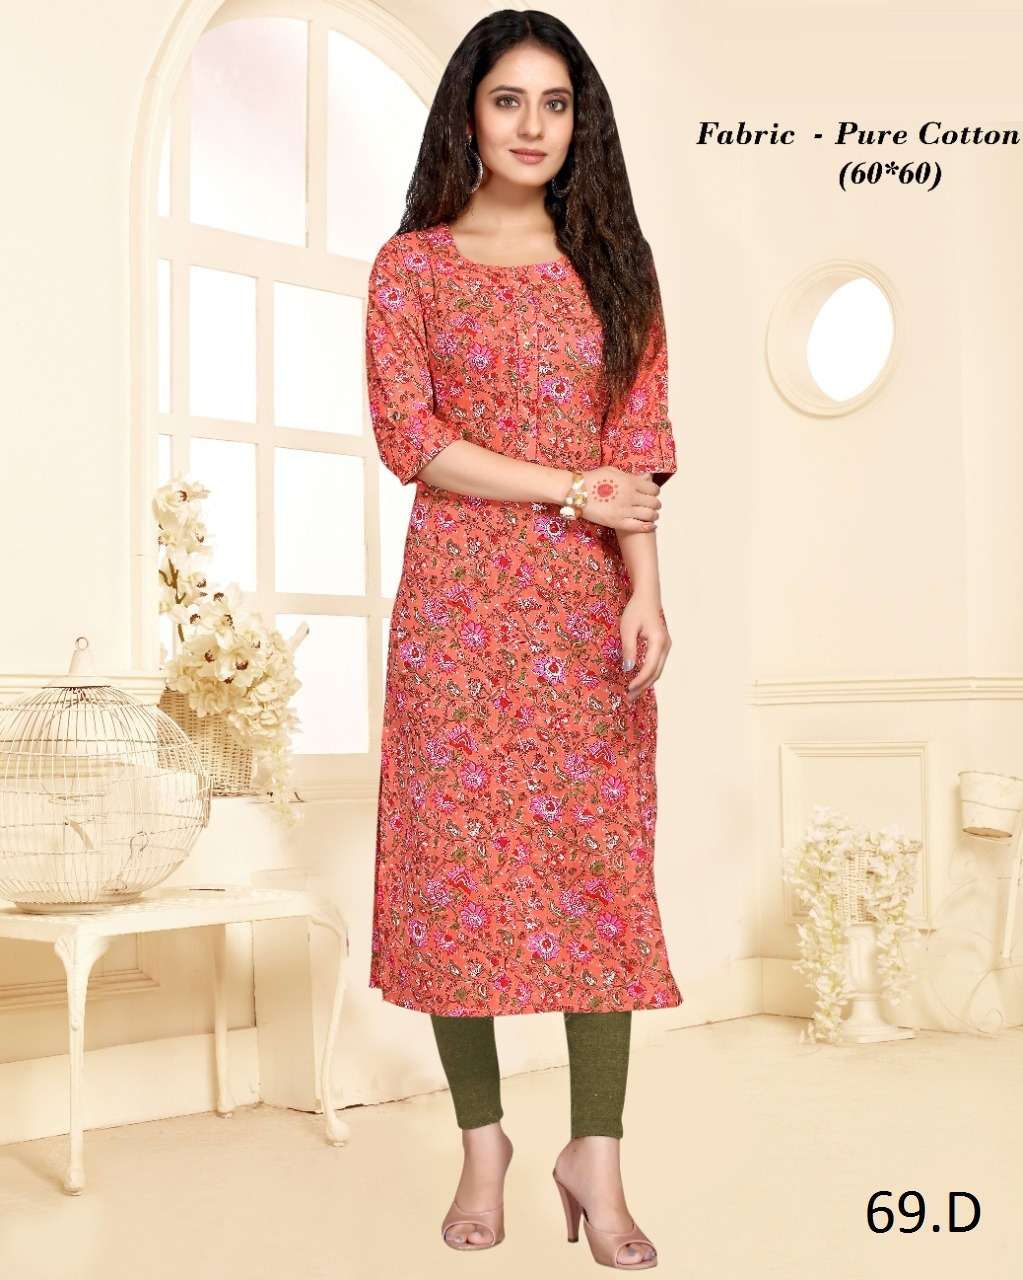 pratham fashion olivia trendy printed kurti with jaipuri prints new catalogue 